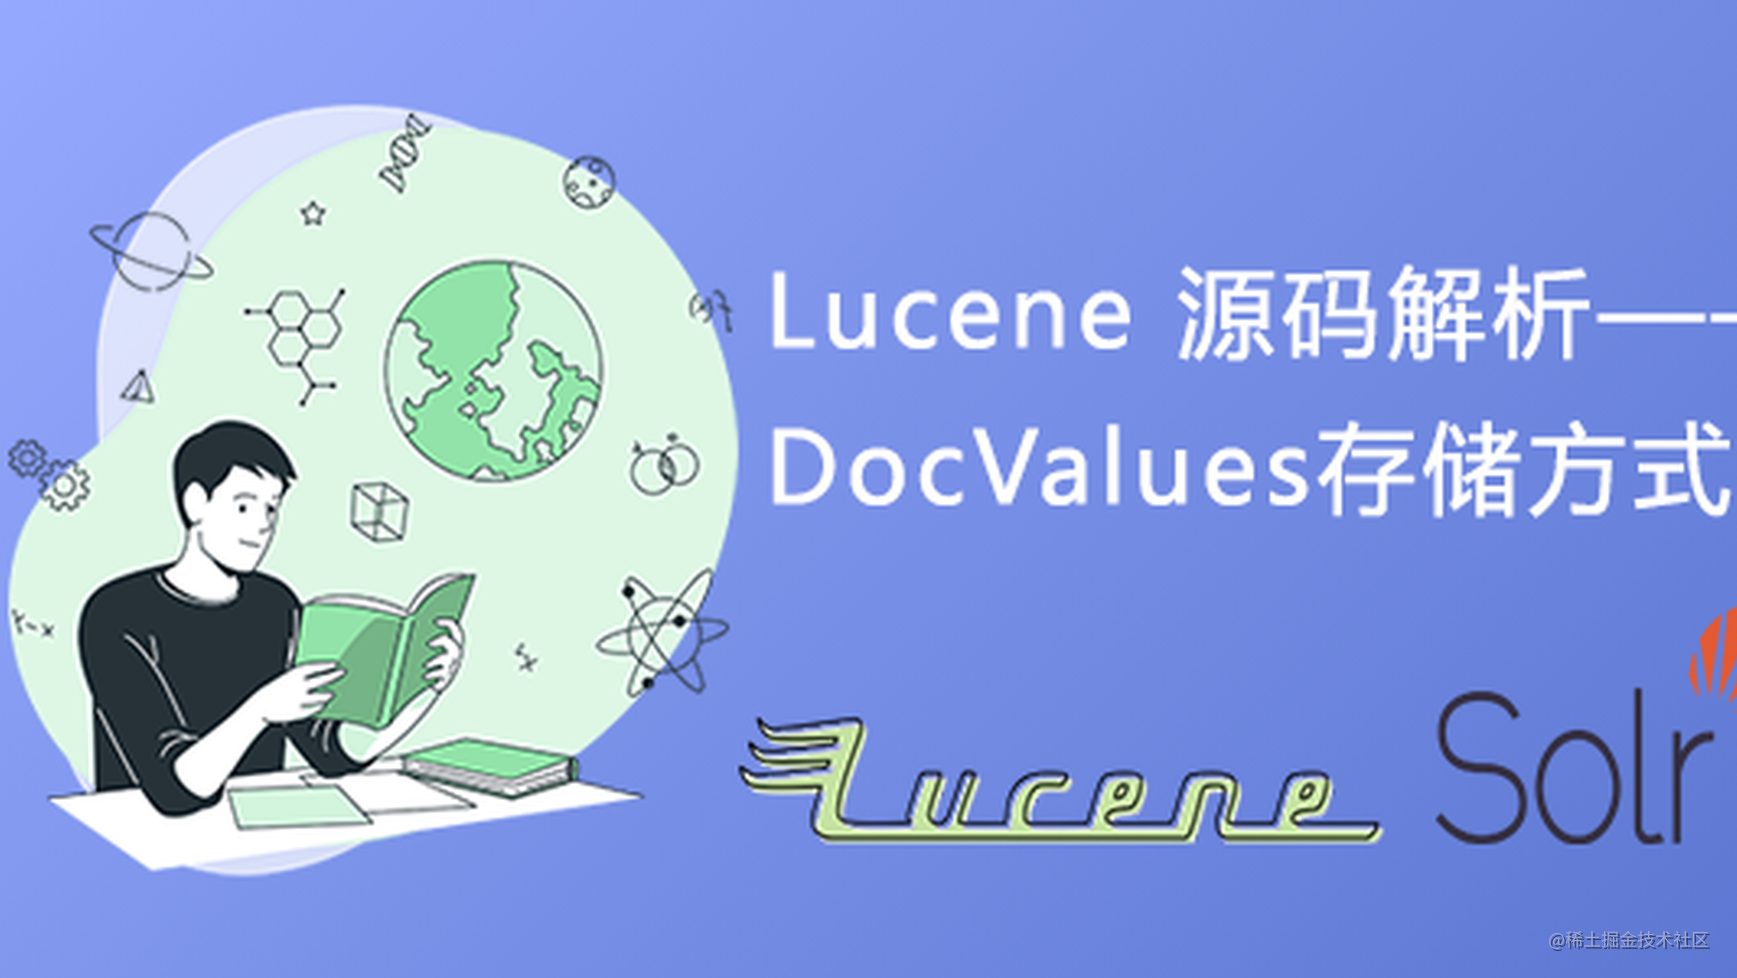 Lucene源码解析——DocValue存储方式